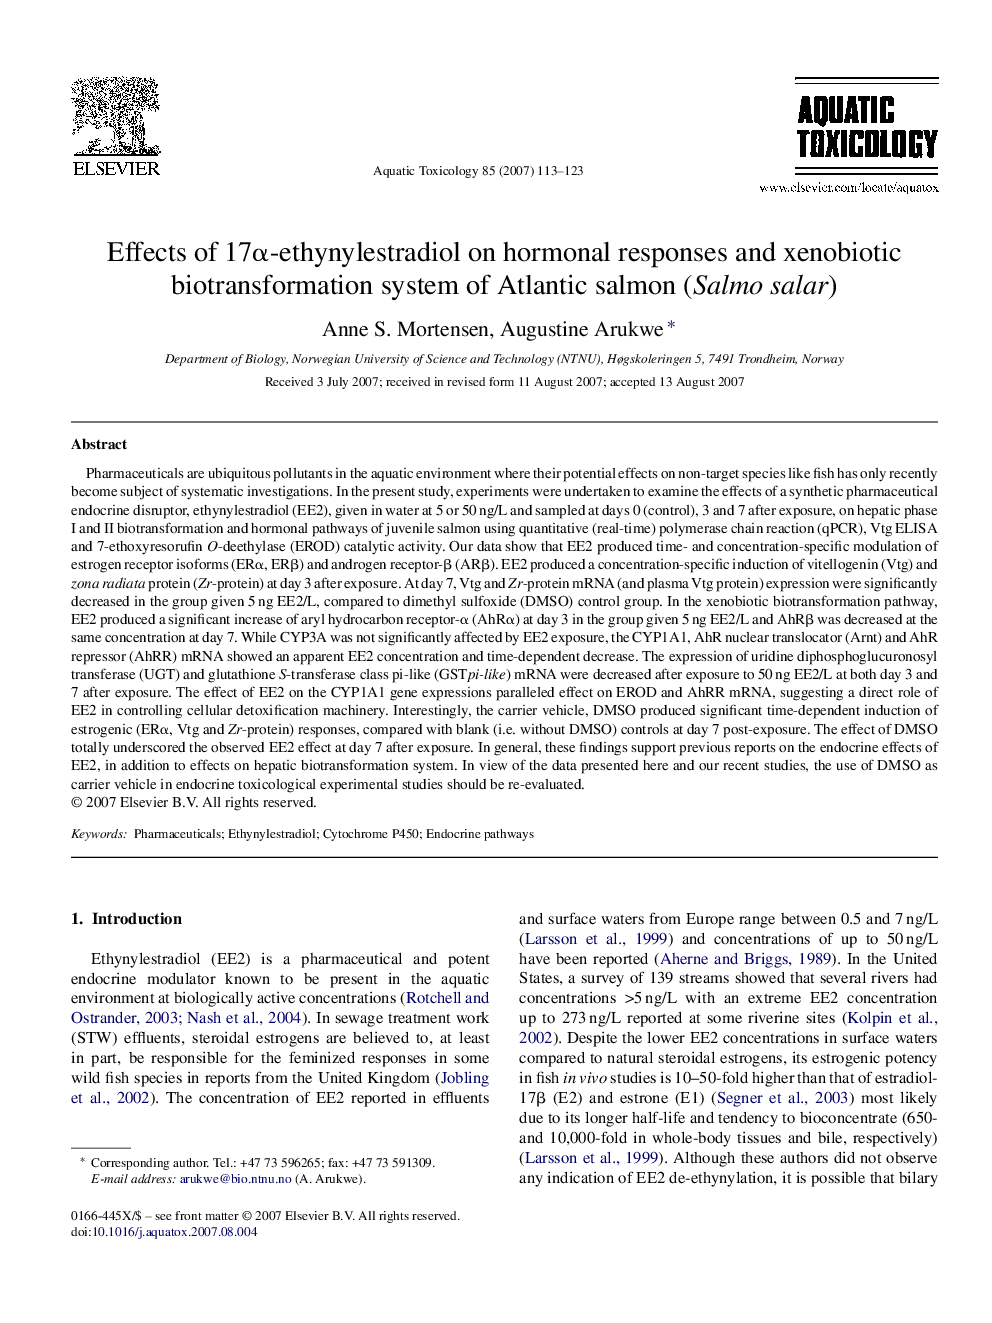 Effects of 17α-ethynylestradiol on hormonal responses and xenobiotic biotransformation system of Atlantic salmon (Salmo salar)